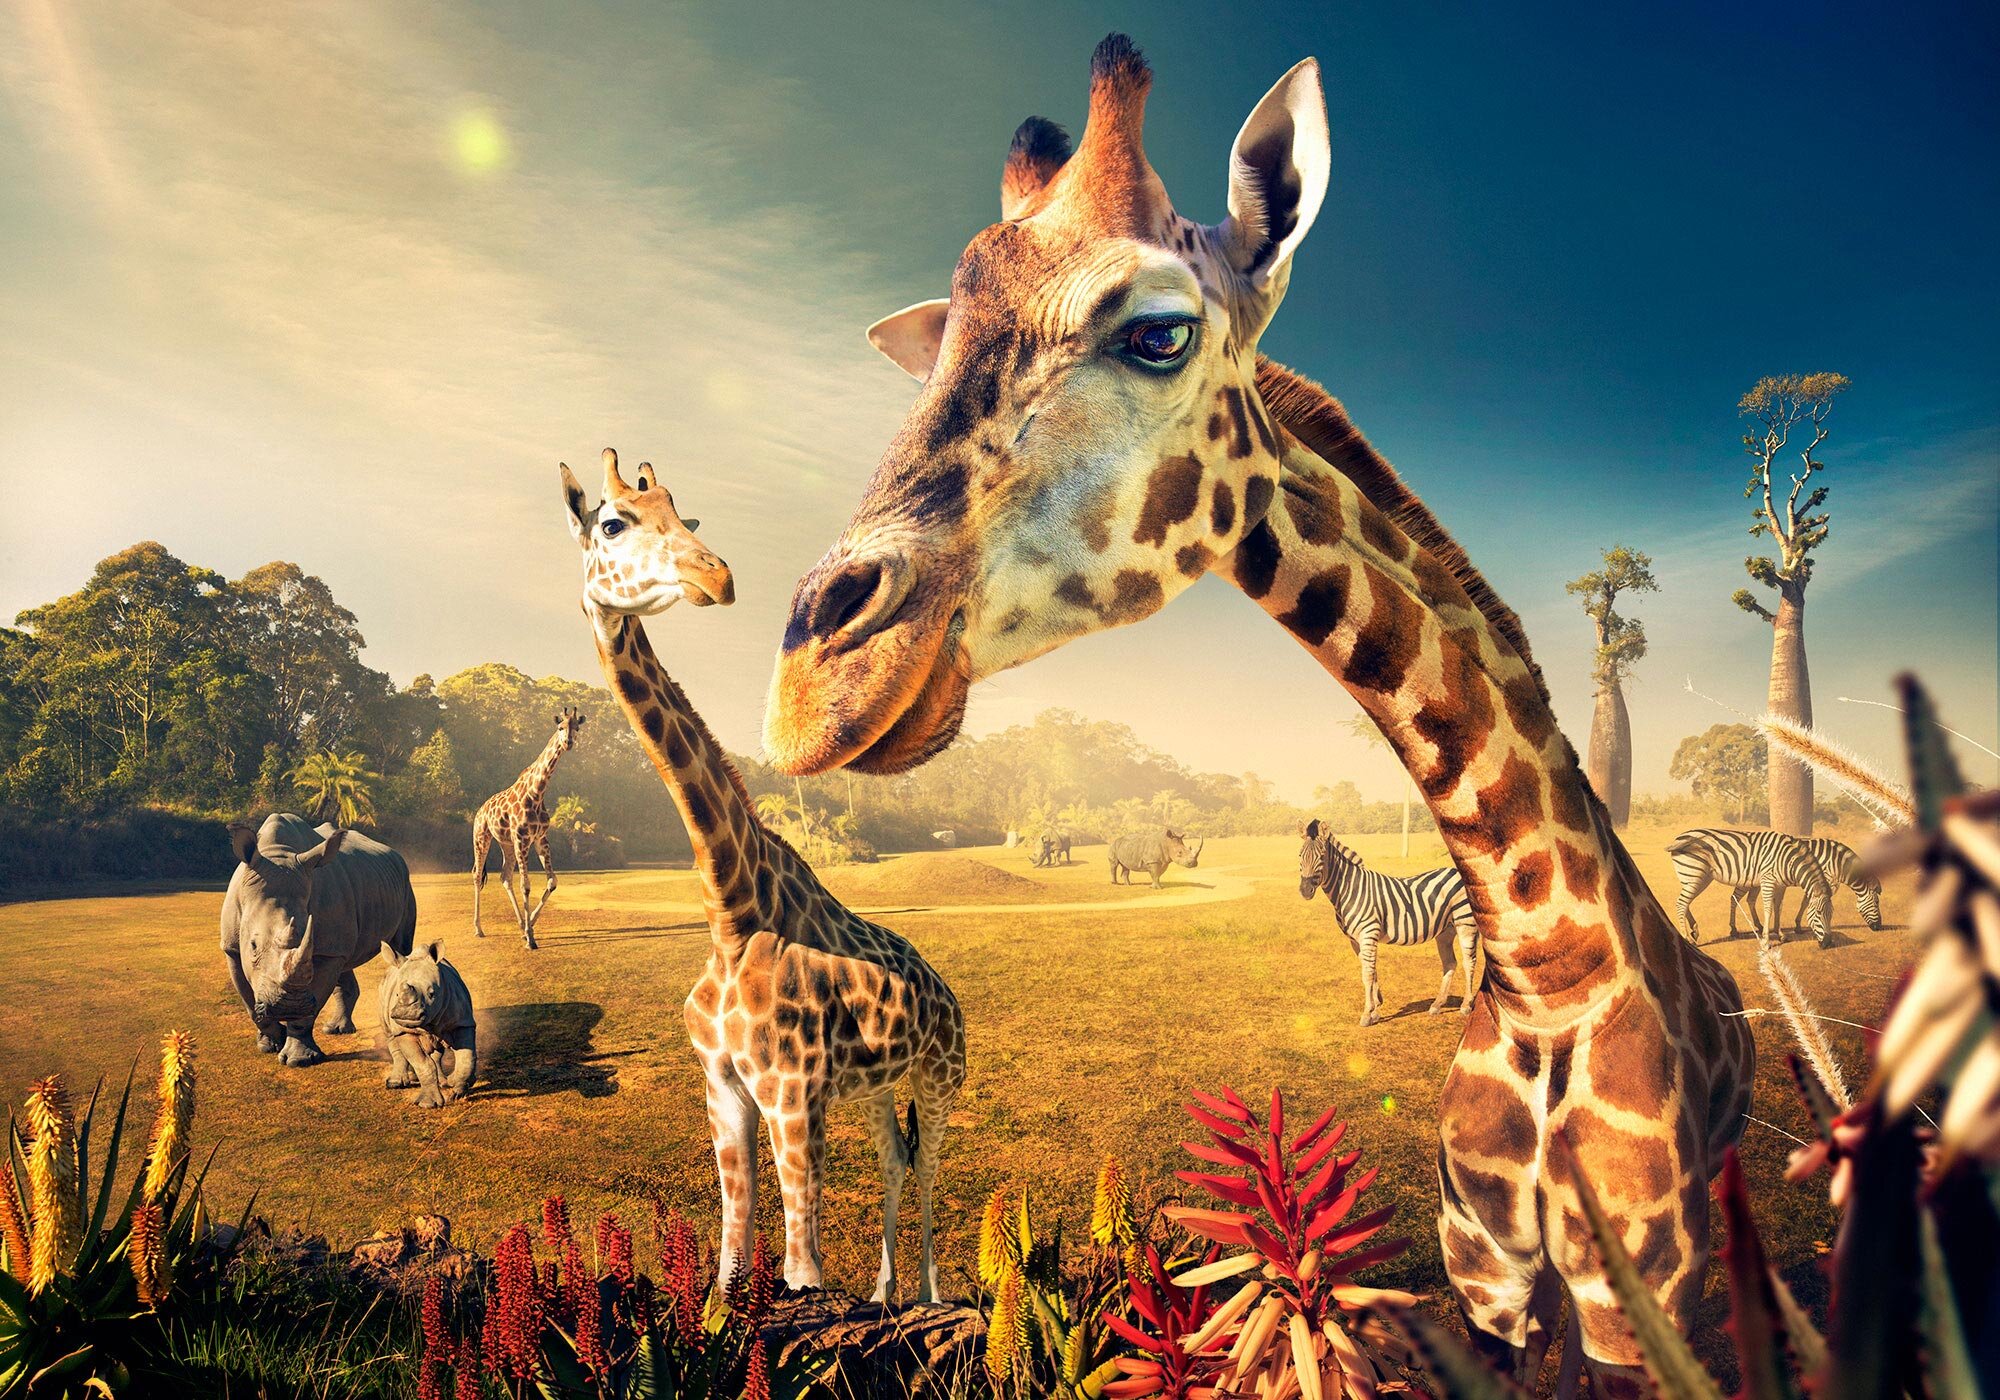 ewp-australiazoo-giraffes.jpg